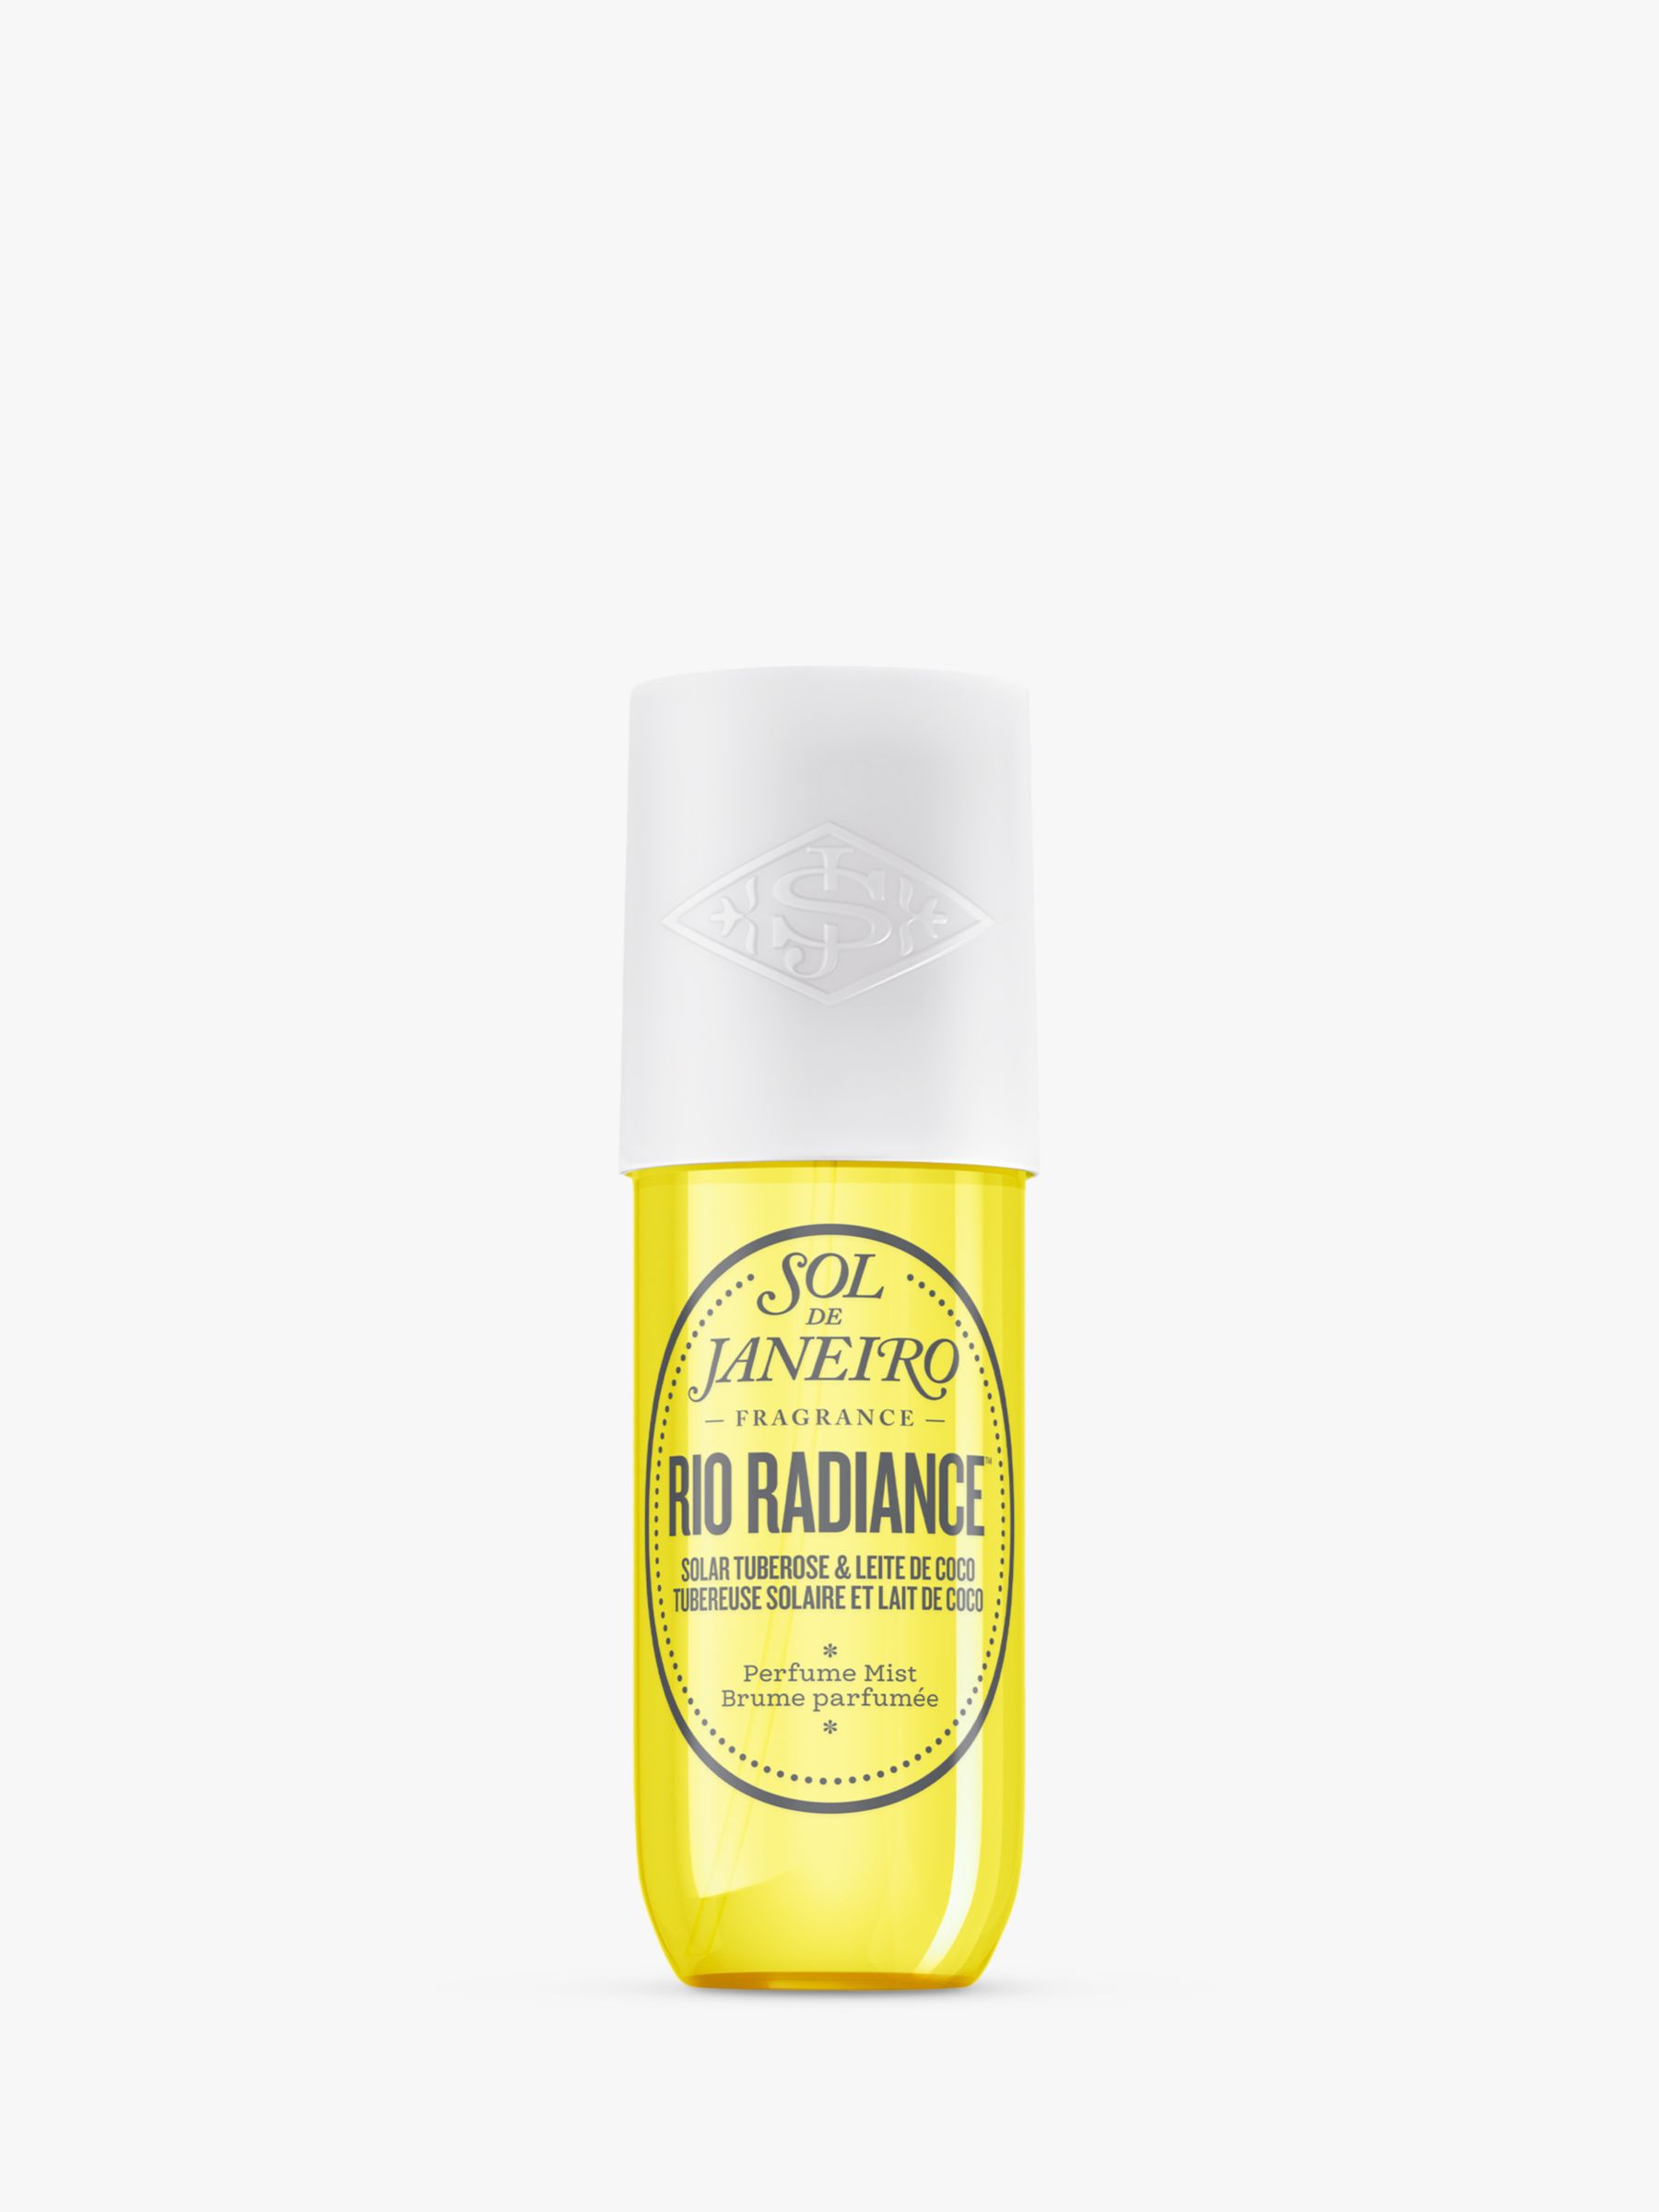 Sol de Janeiro Rio Radiance Perfume Mist, 240ml